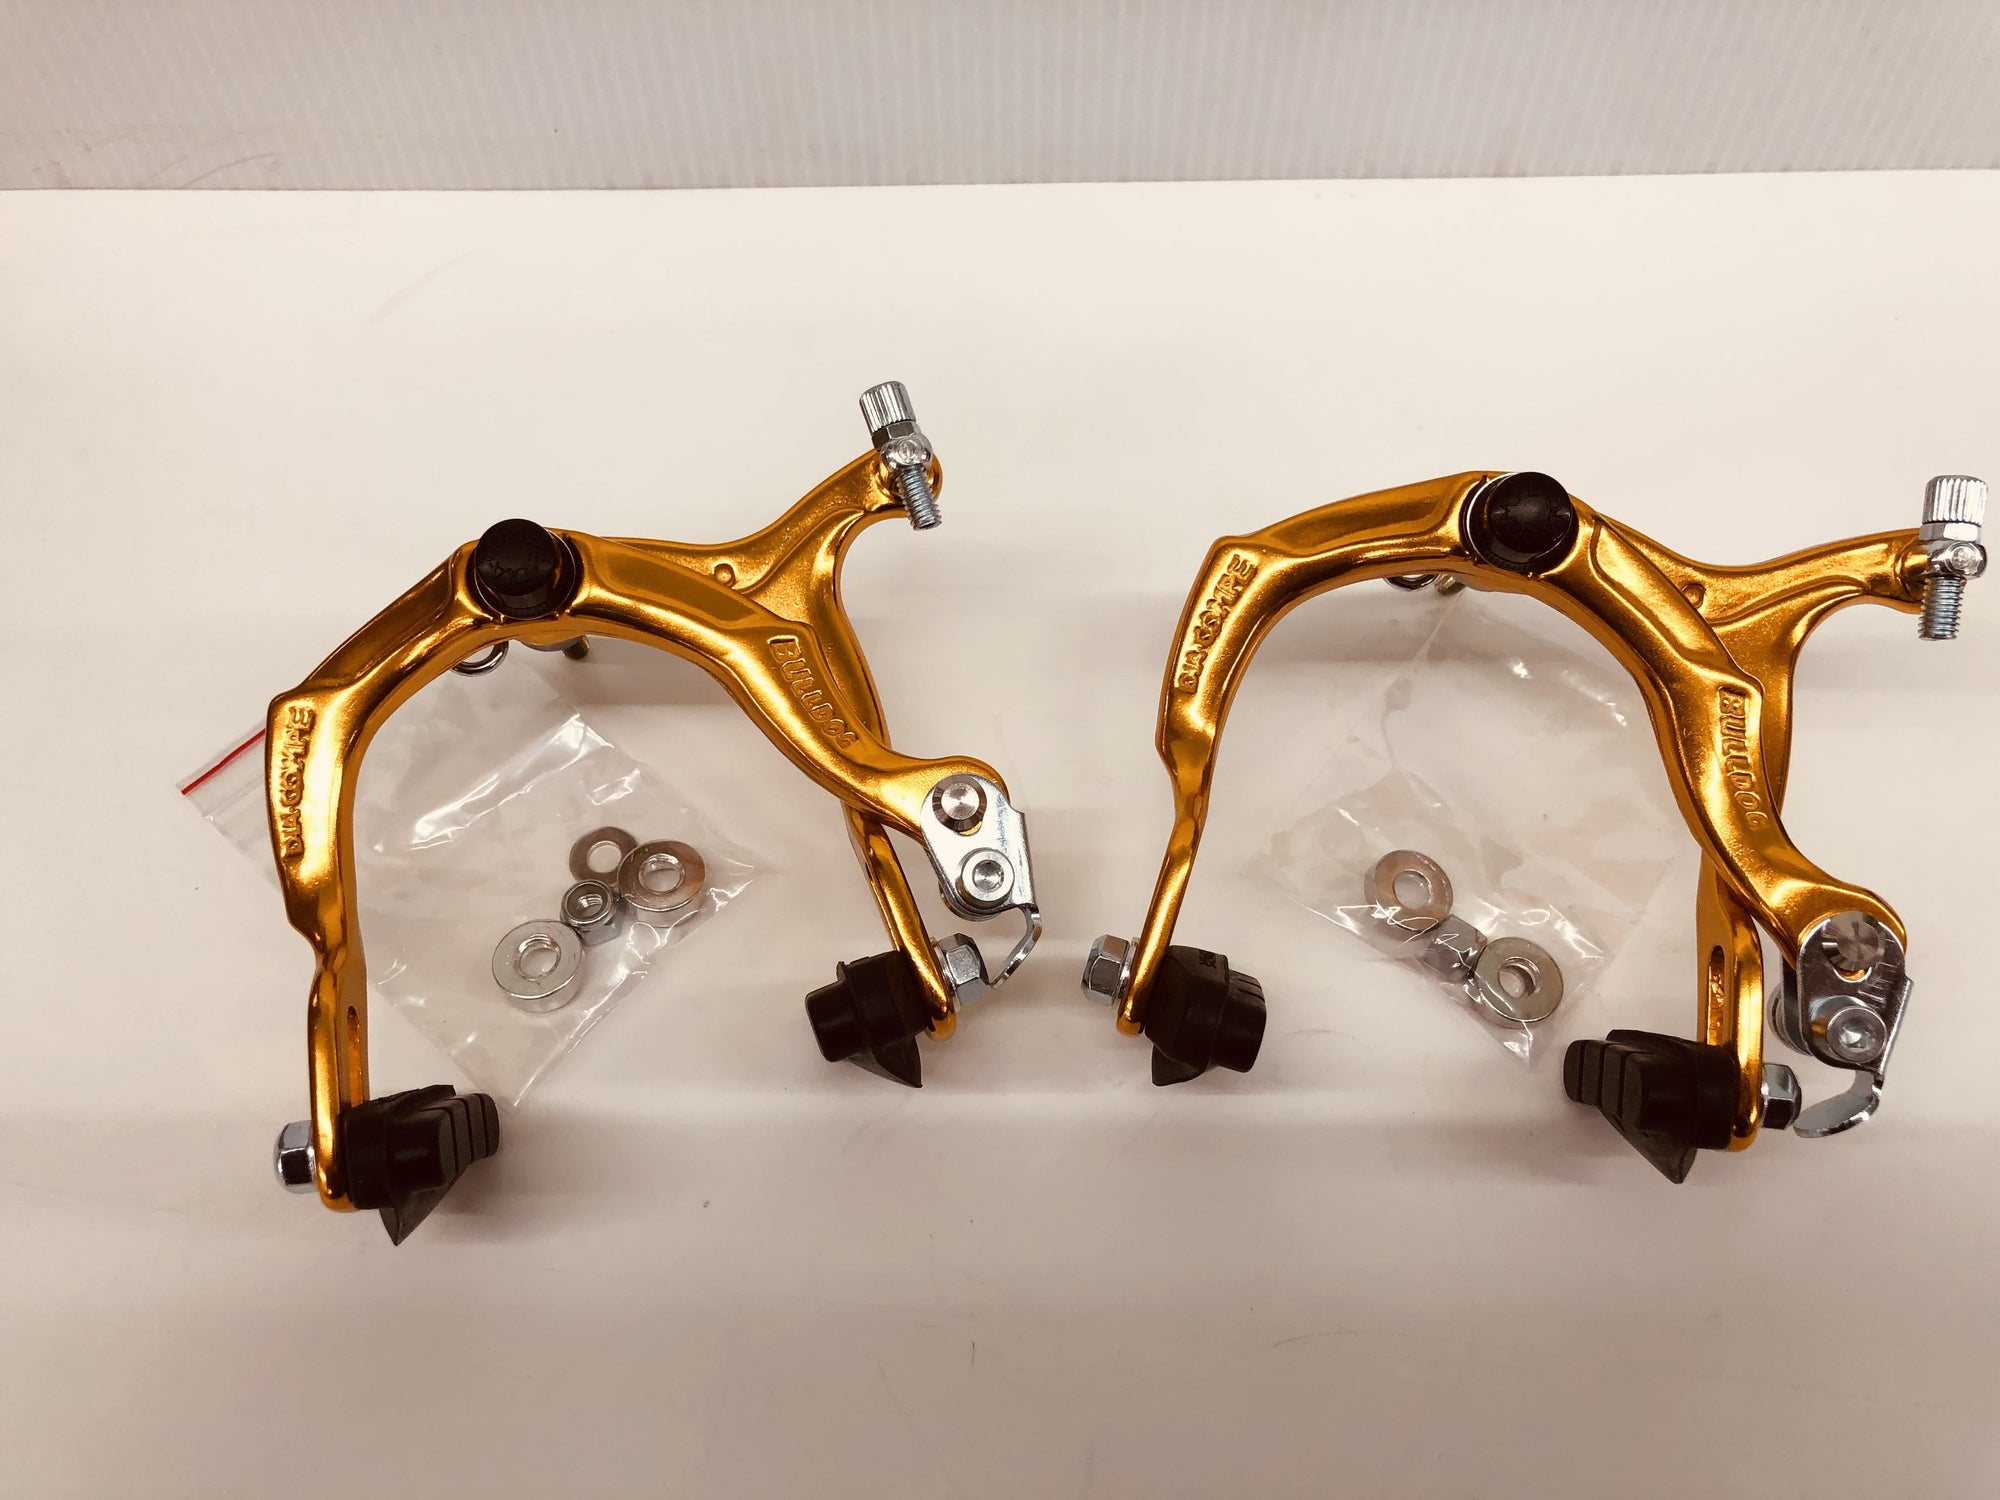 Dia-Compe Bulldog BMX Side Pull Caliper Brake Set - Front And Rear (Gold)